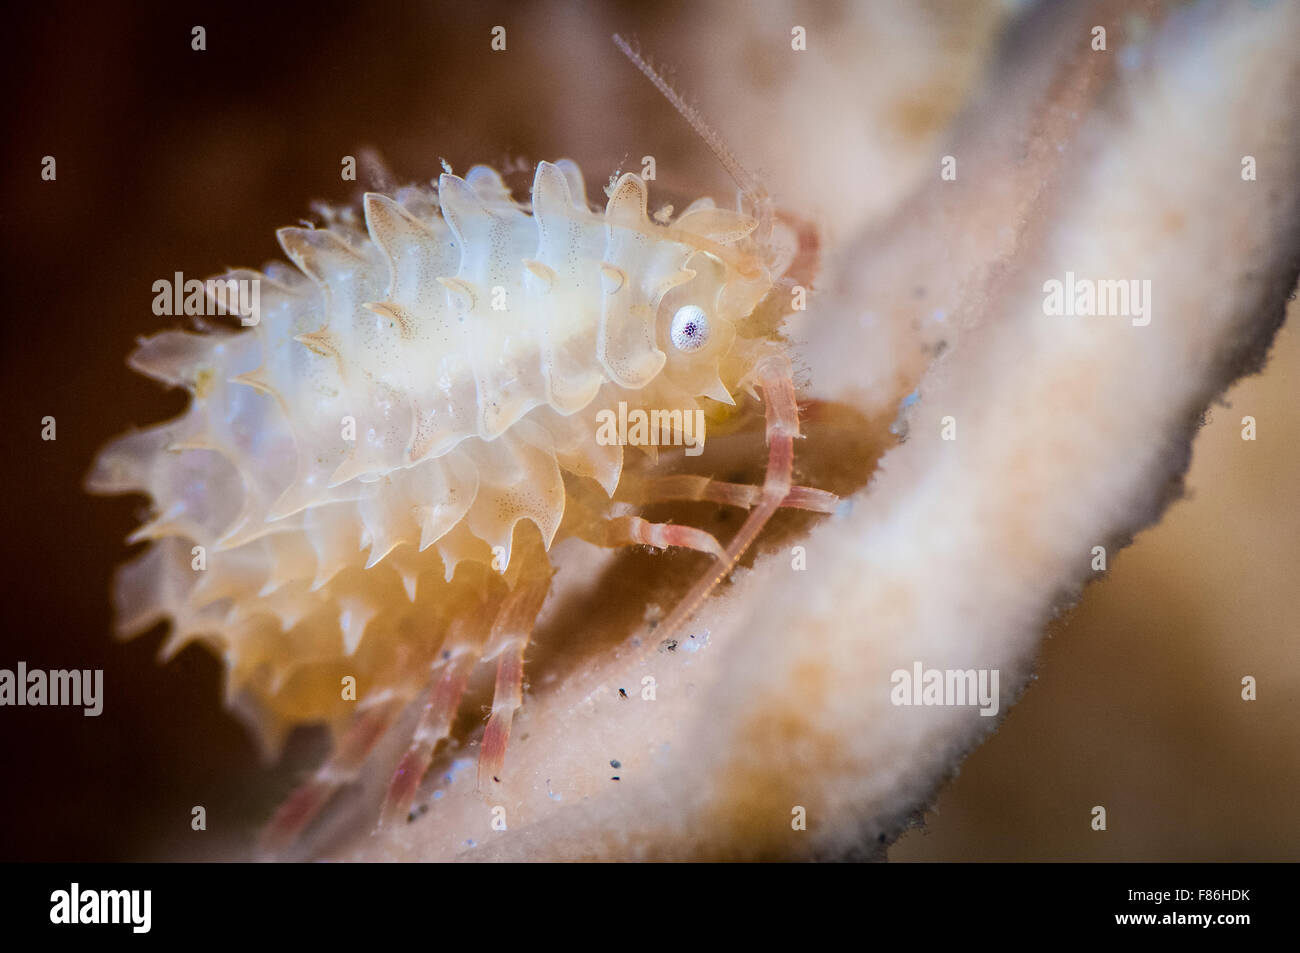 Small crustacean underwater on a sea sponge Stock Photo